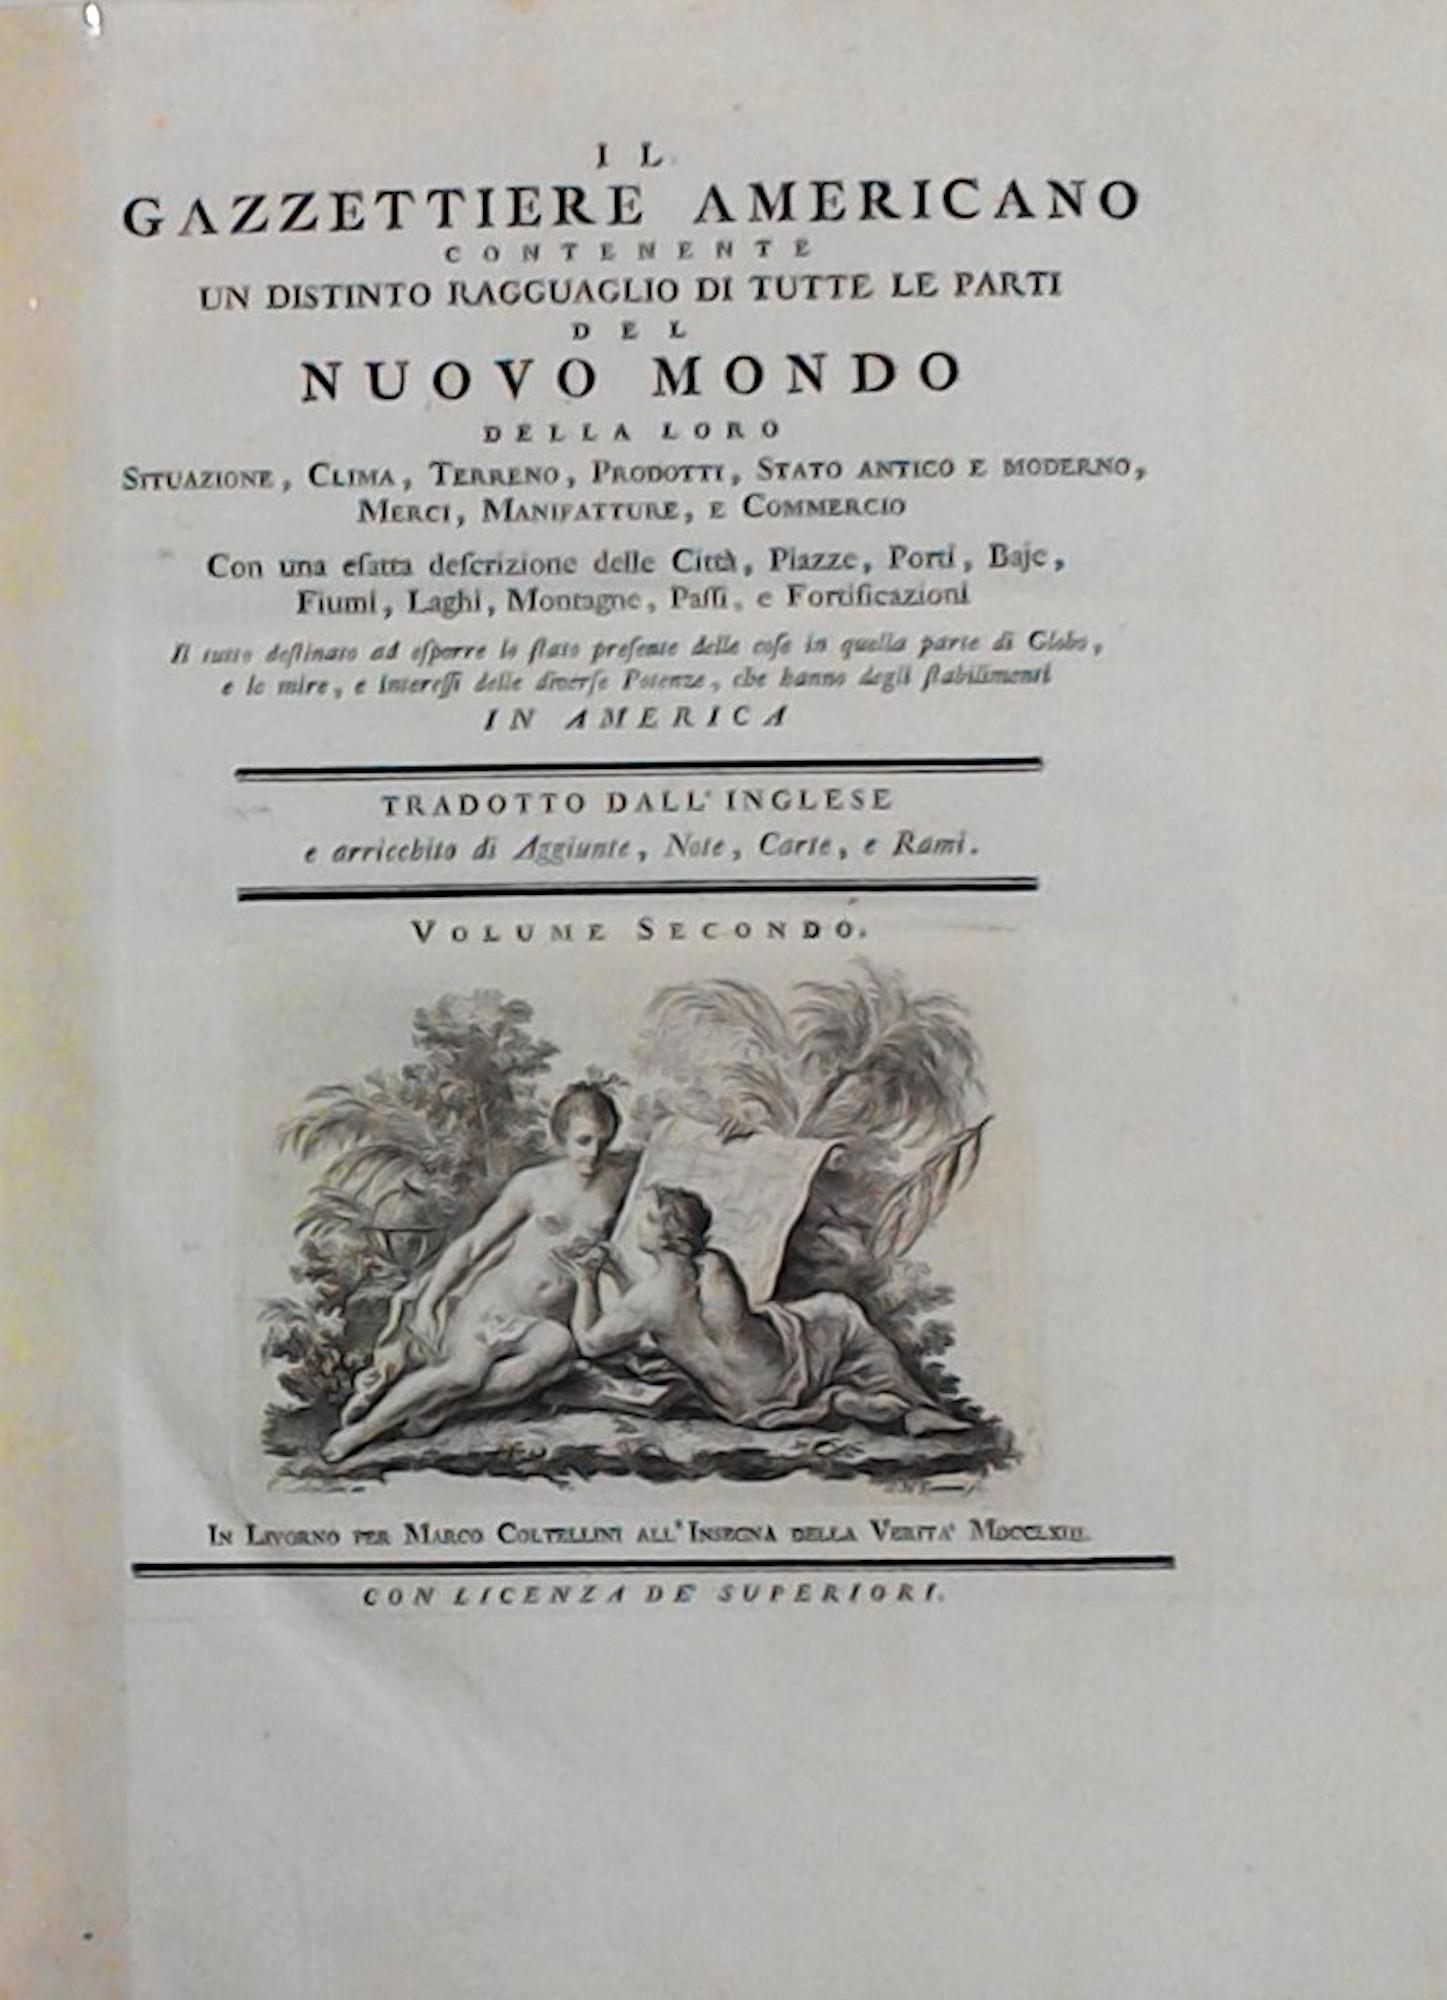 Il Gazzettiere Americano - Ancient Illustrated Book on the Americas - 1763 For Sale 13